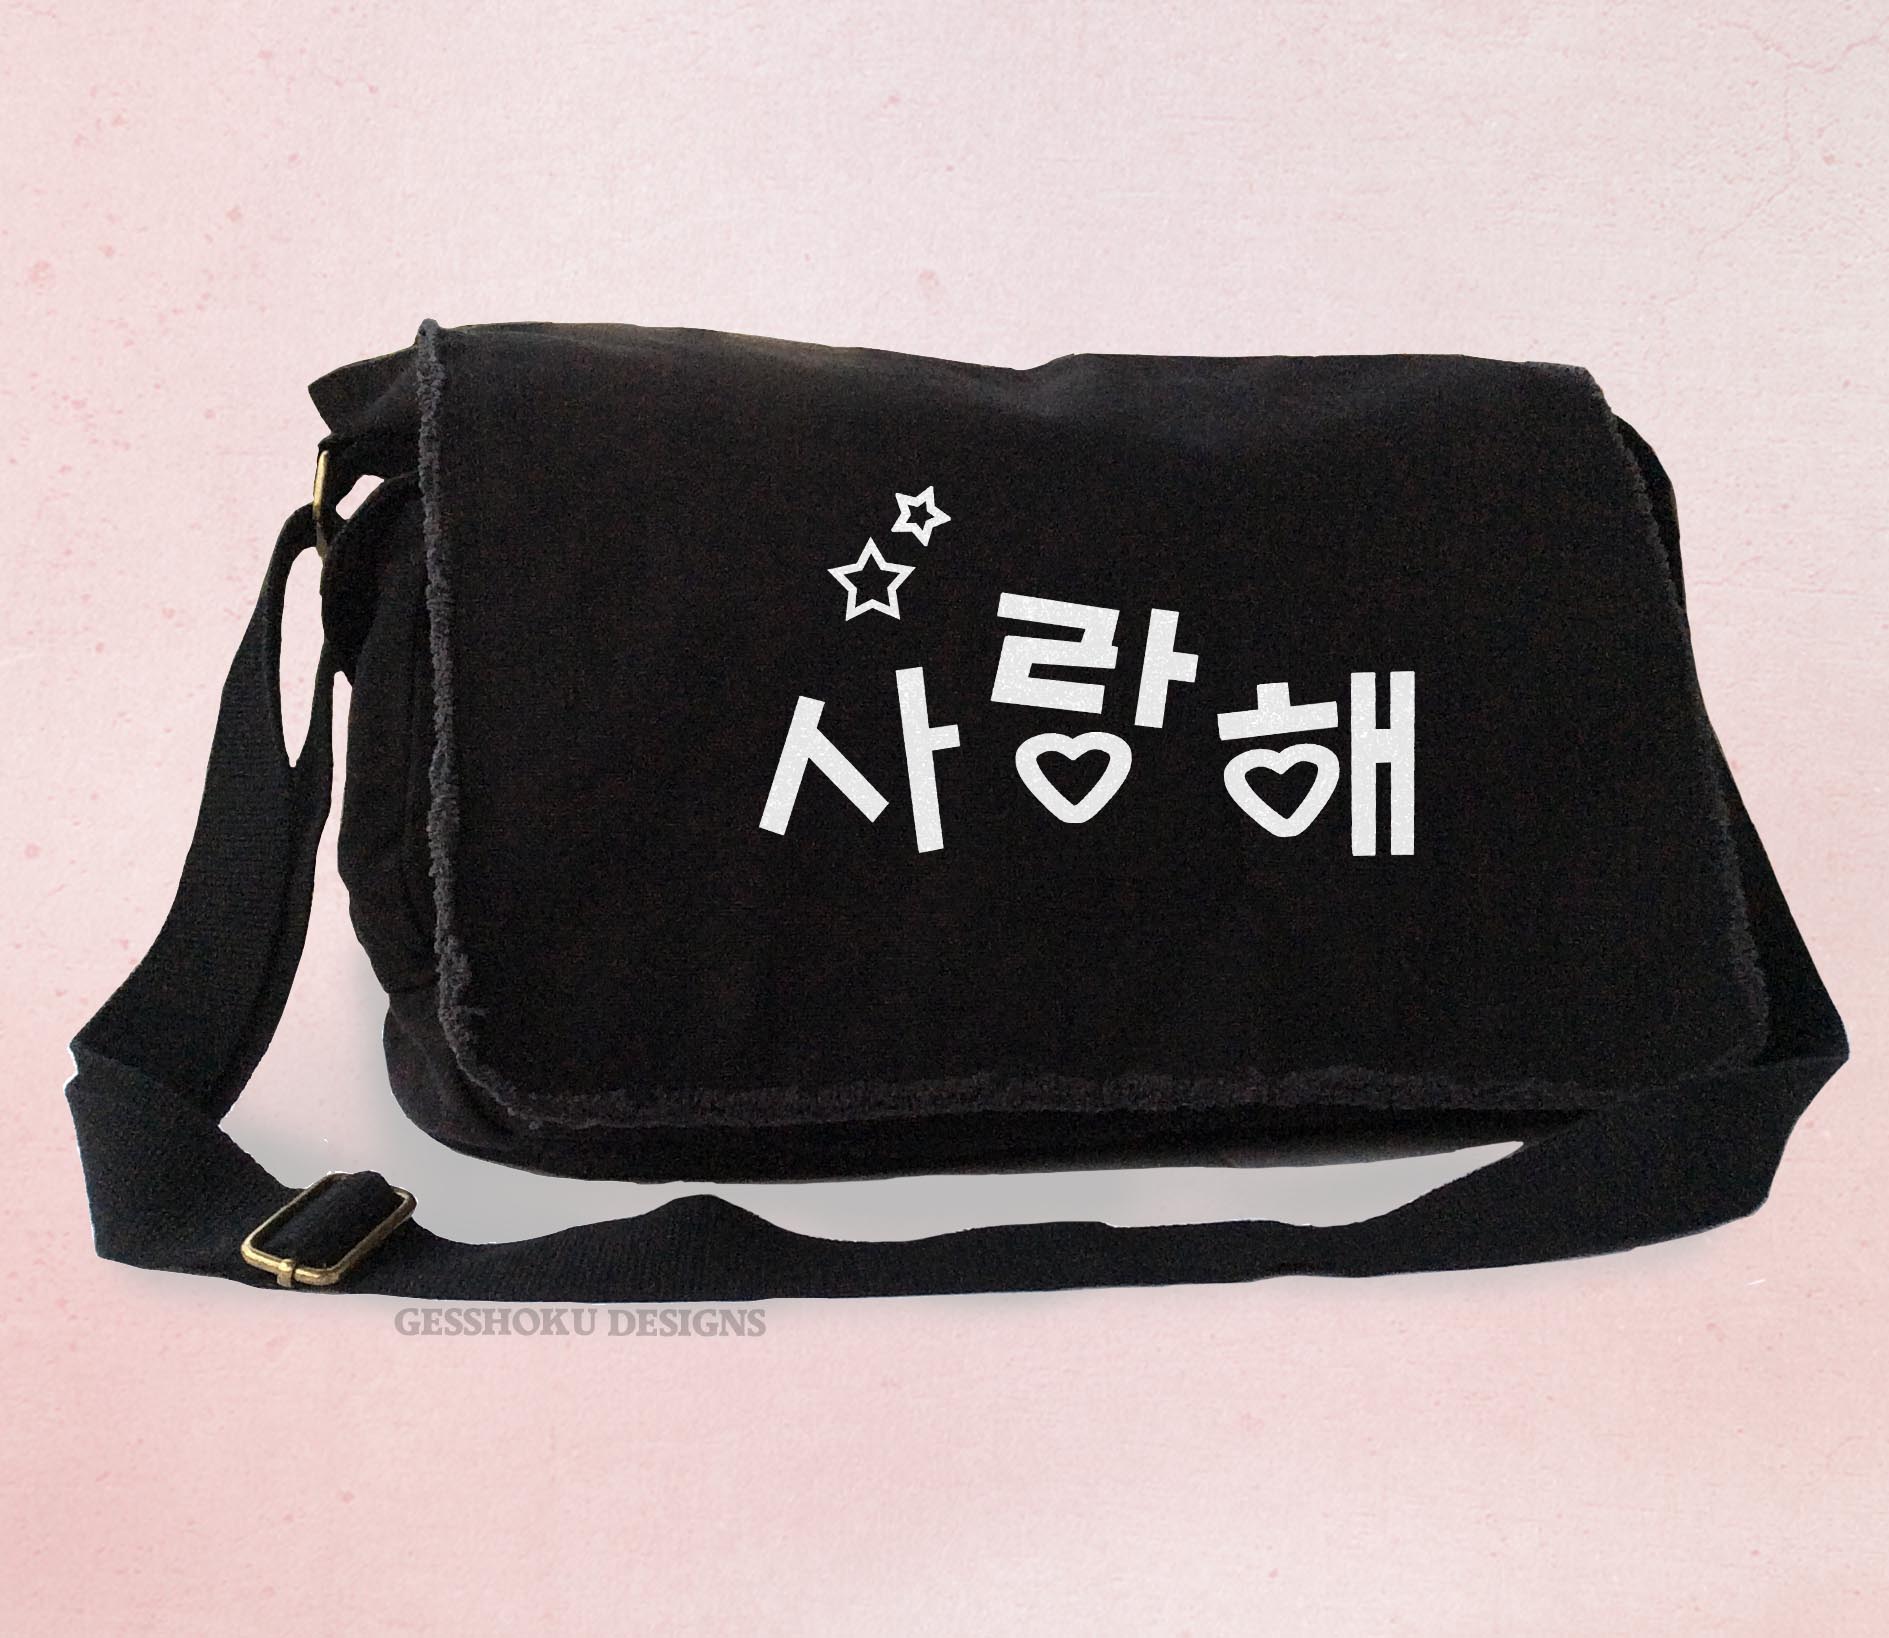 Saranghae Korean "I Love You" Messenger Bag - Black